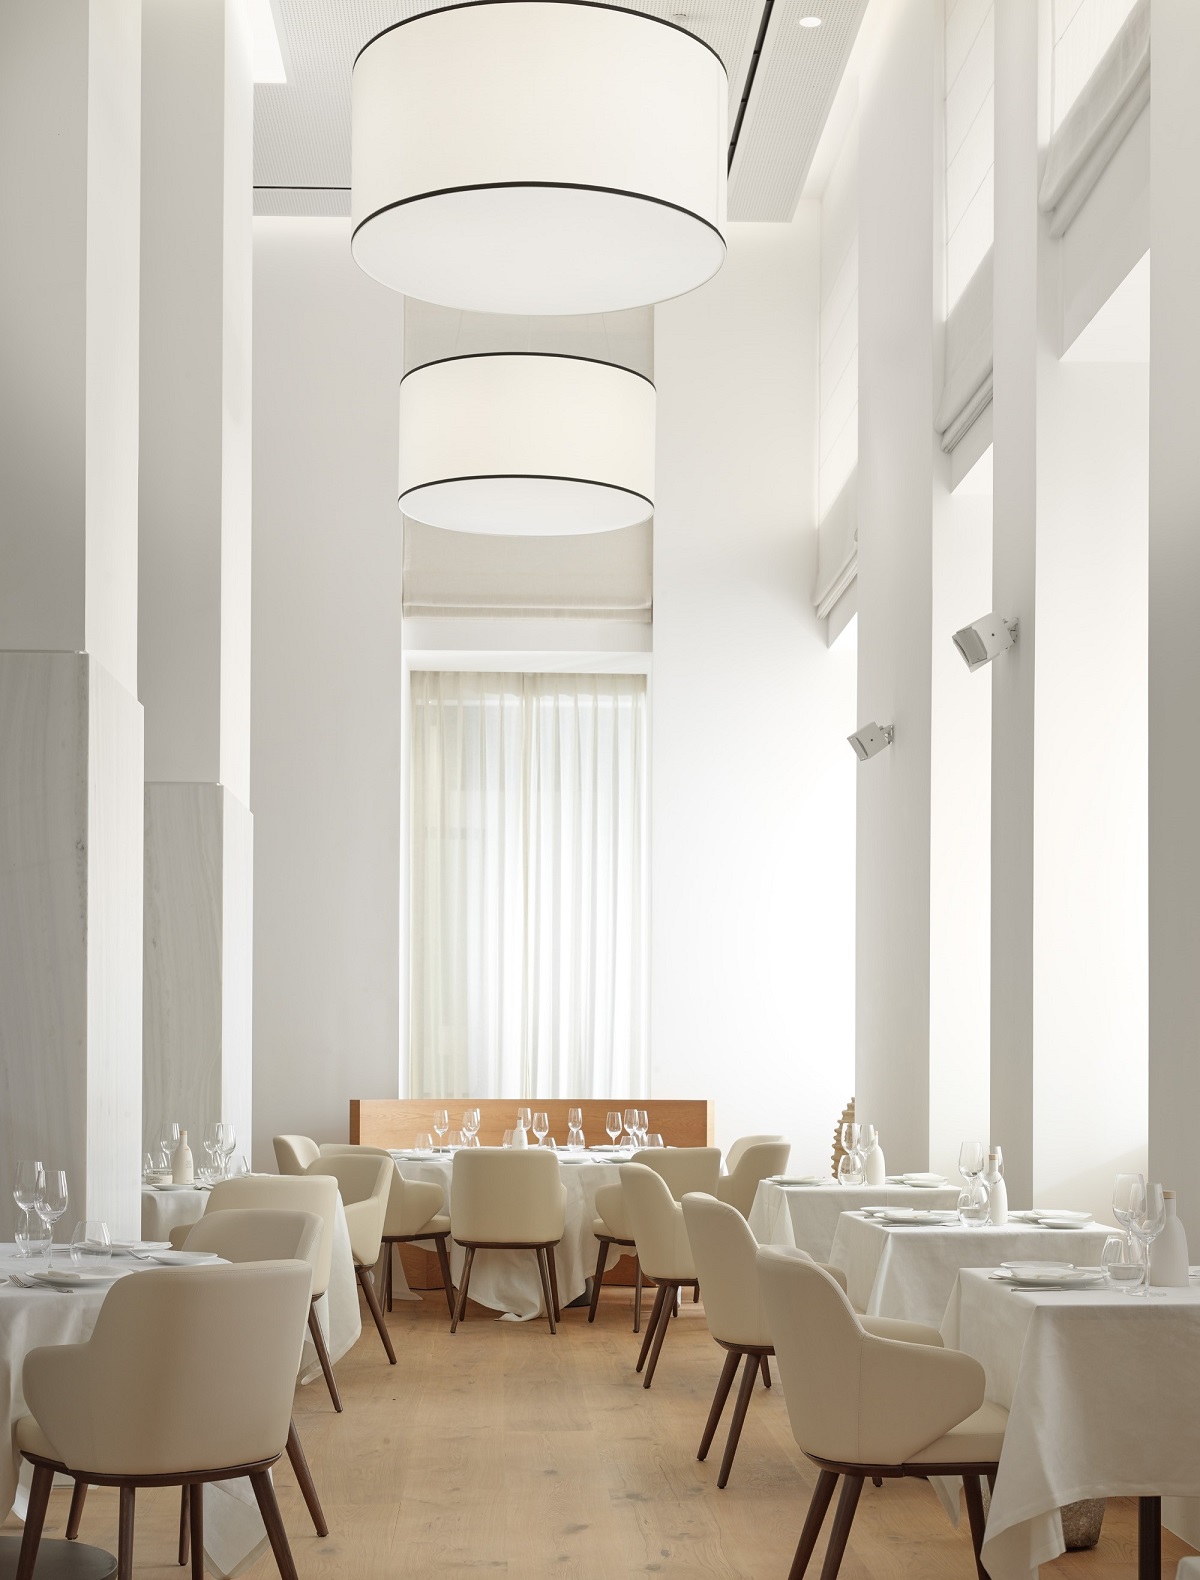 double volume and white on white design make a dramatic statement in the restaurant at xenodocheio milos athens